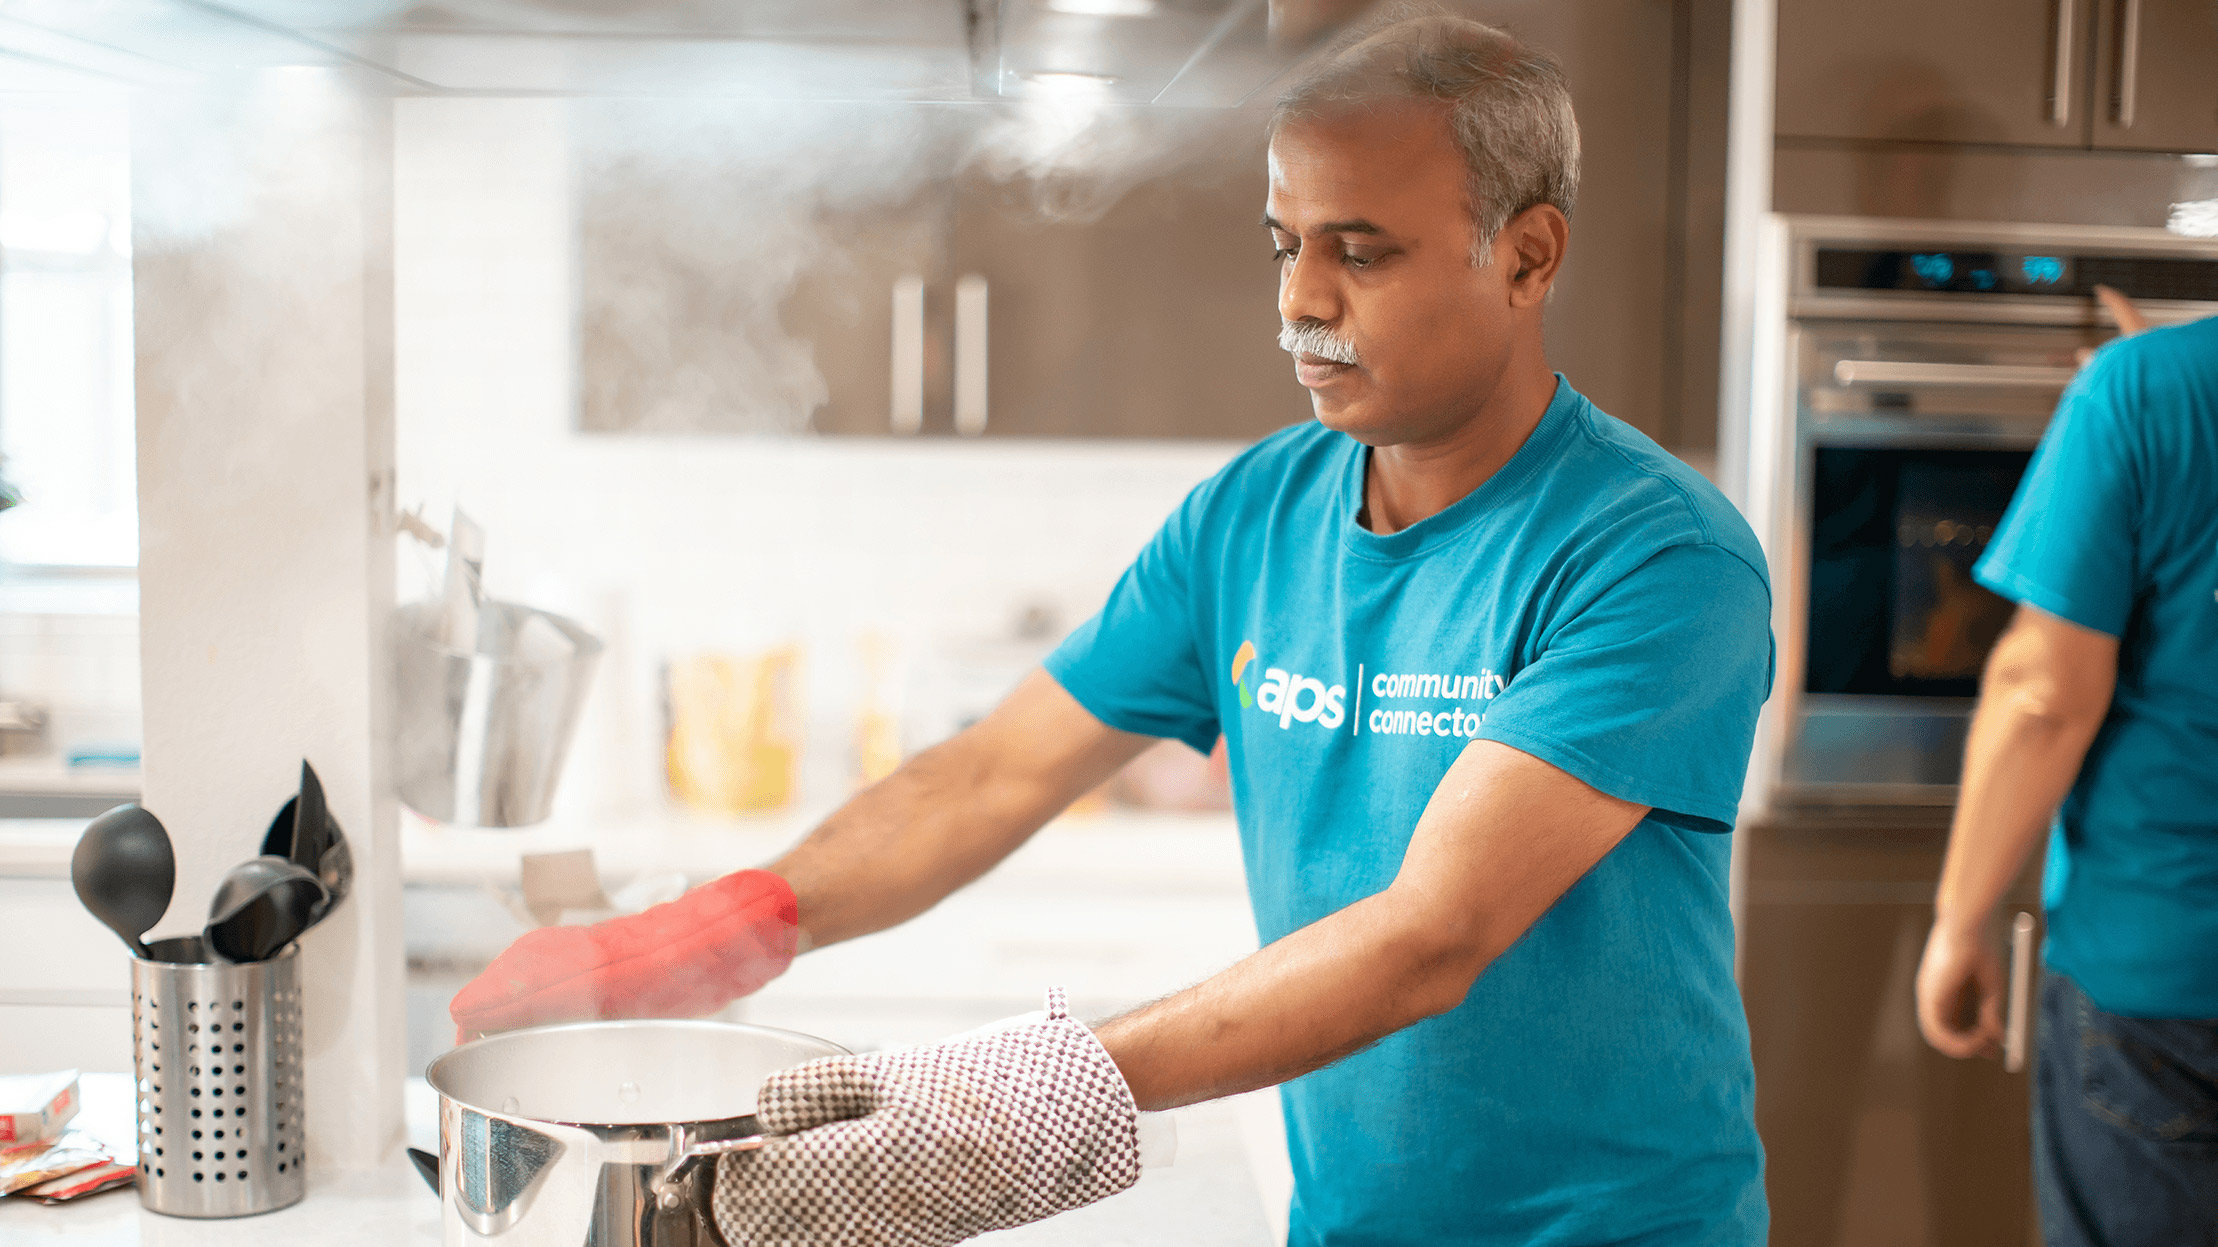 APS employee wearing volunteer shirt cooking in kitchen.